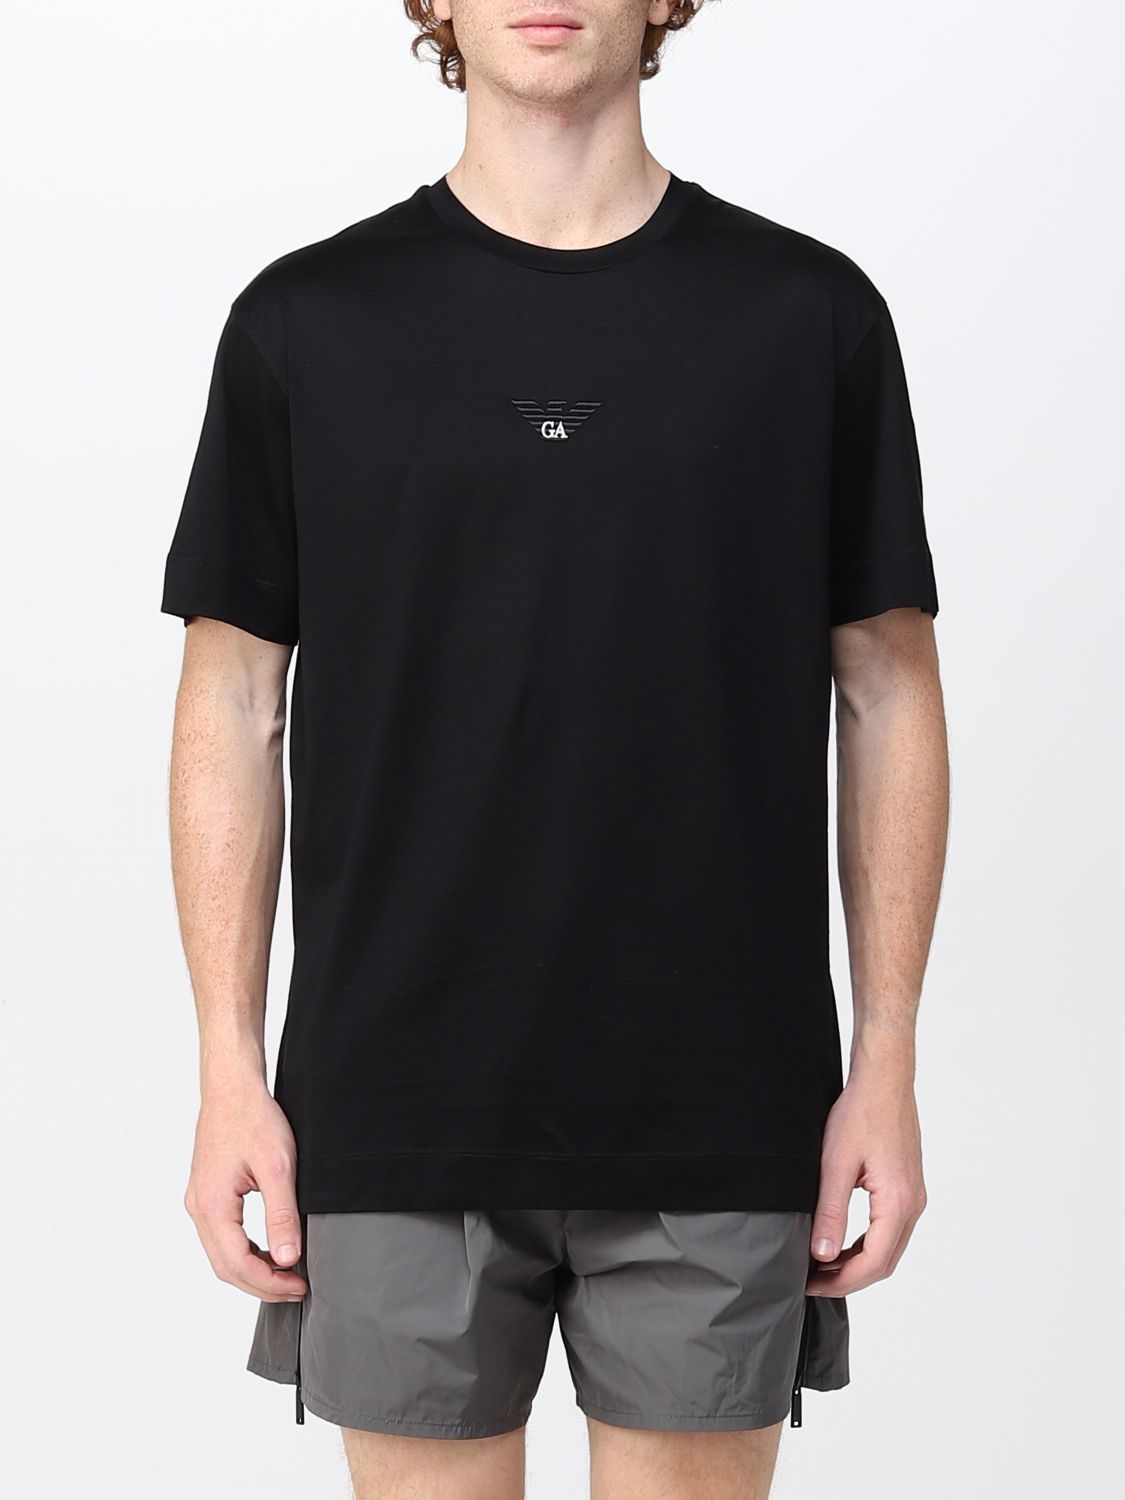 EMPORIO ARMANI: t-shirt for man - Black | Emporio Armani t-shirt ...